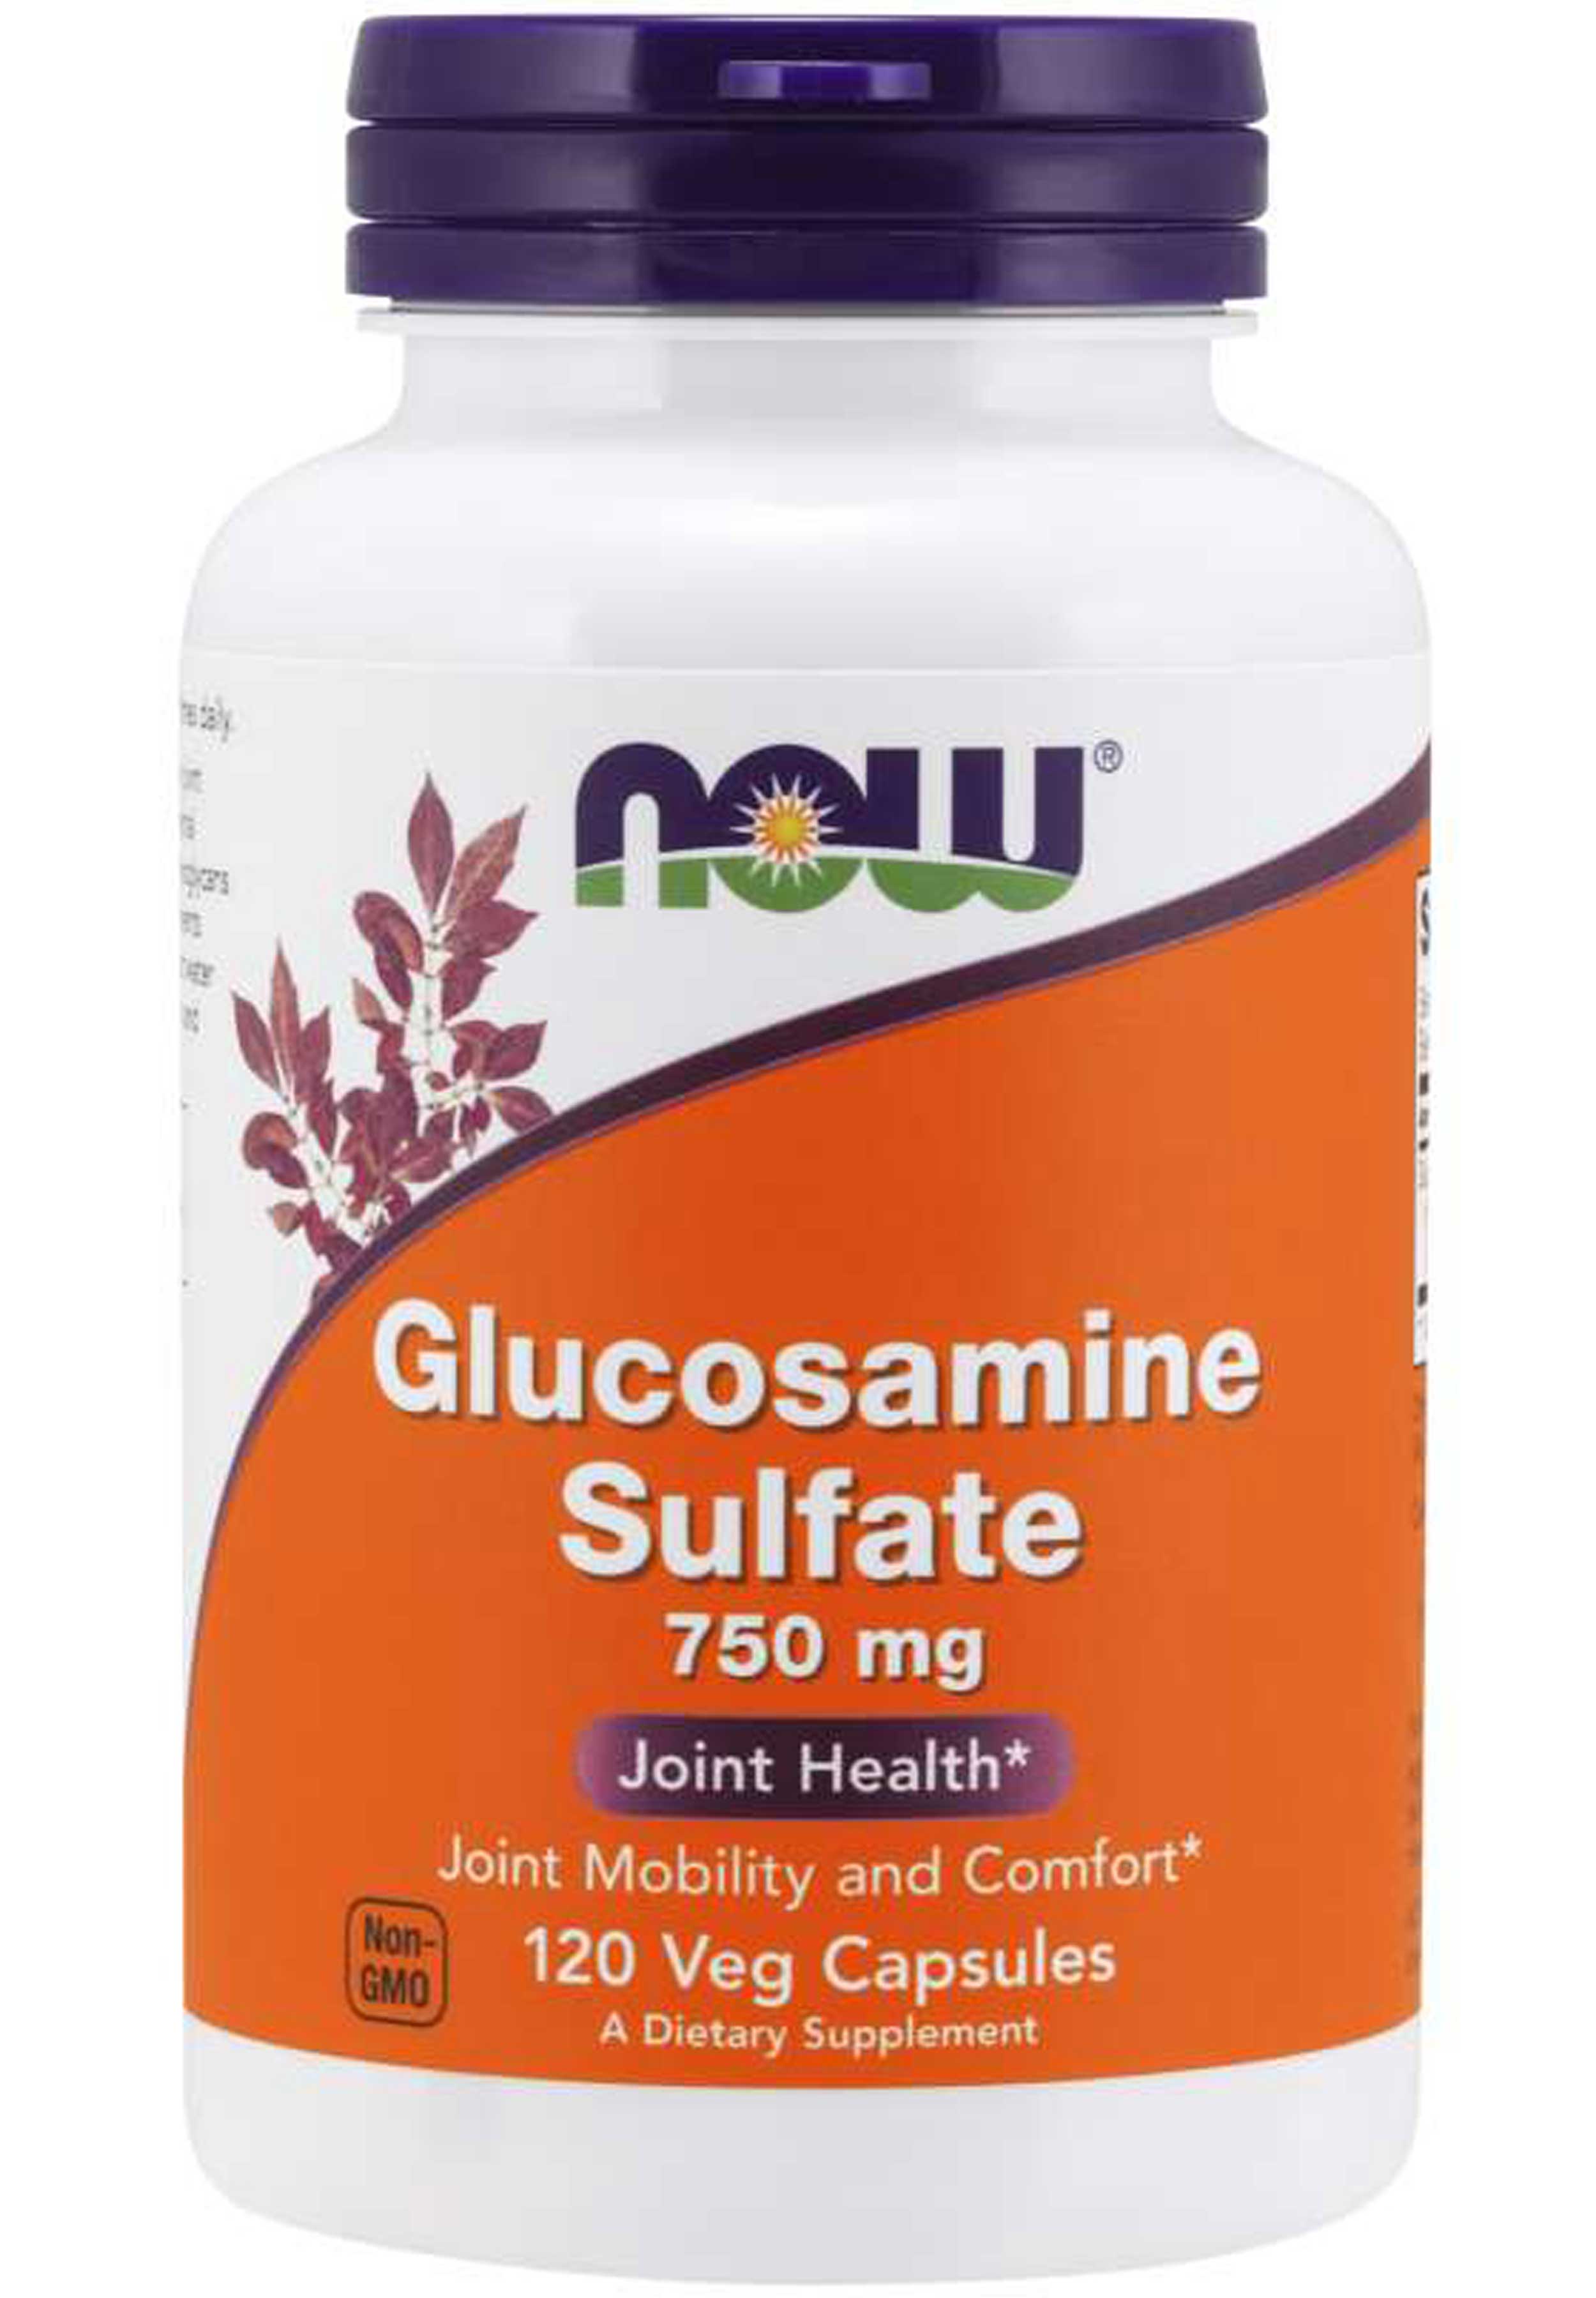 NOW Glucosamine Sulfate 750 mg